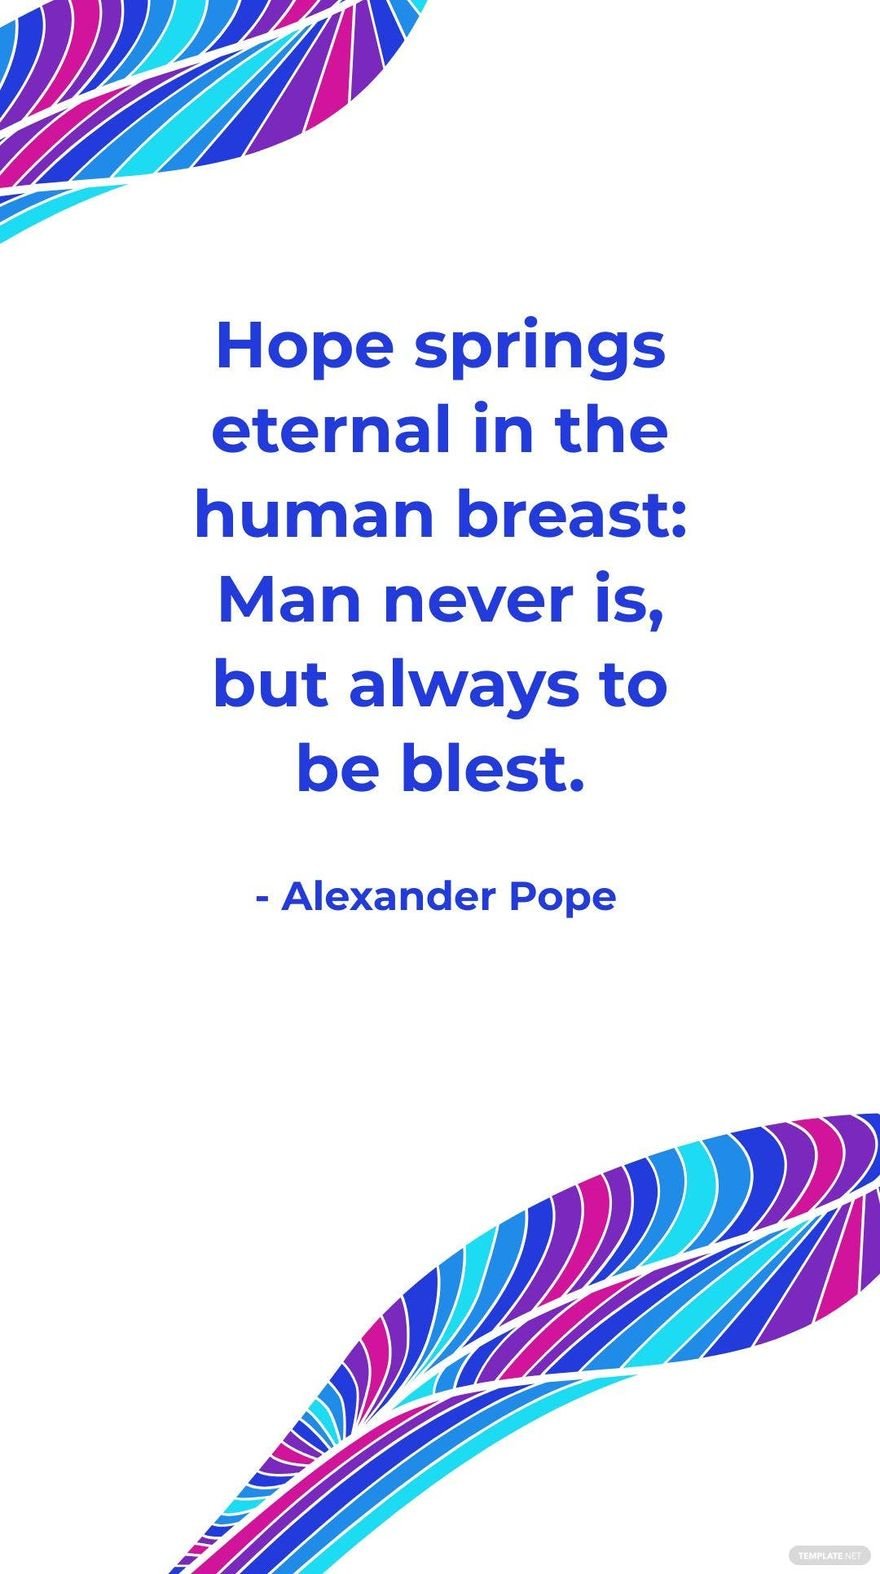 Free Alexander Pope - Hope springs eternal in the human breast: Man never is, but always to be blest. in JPG